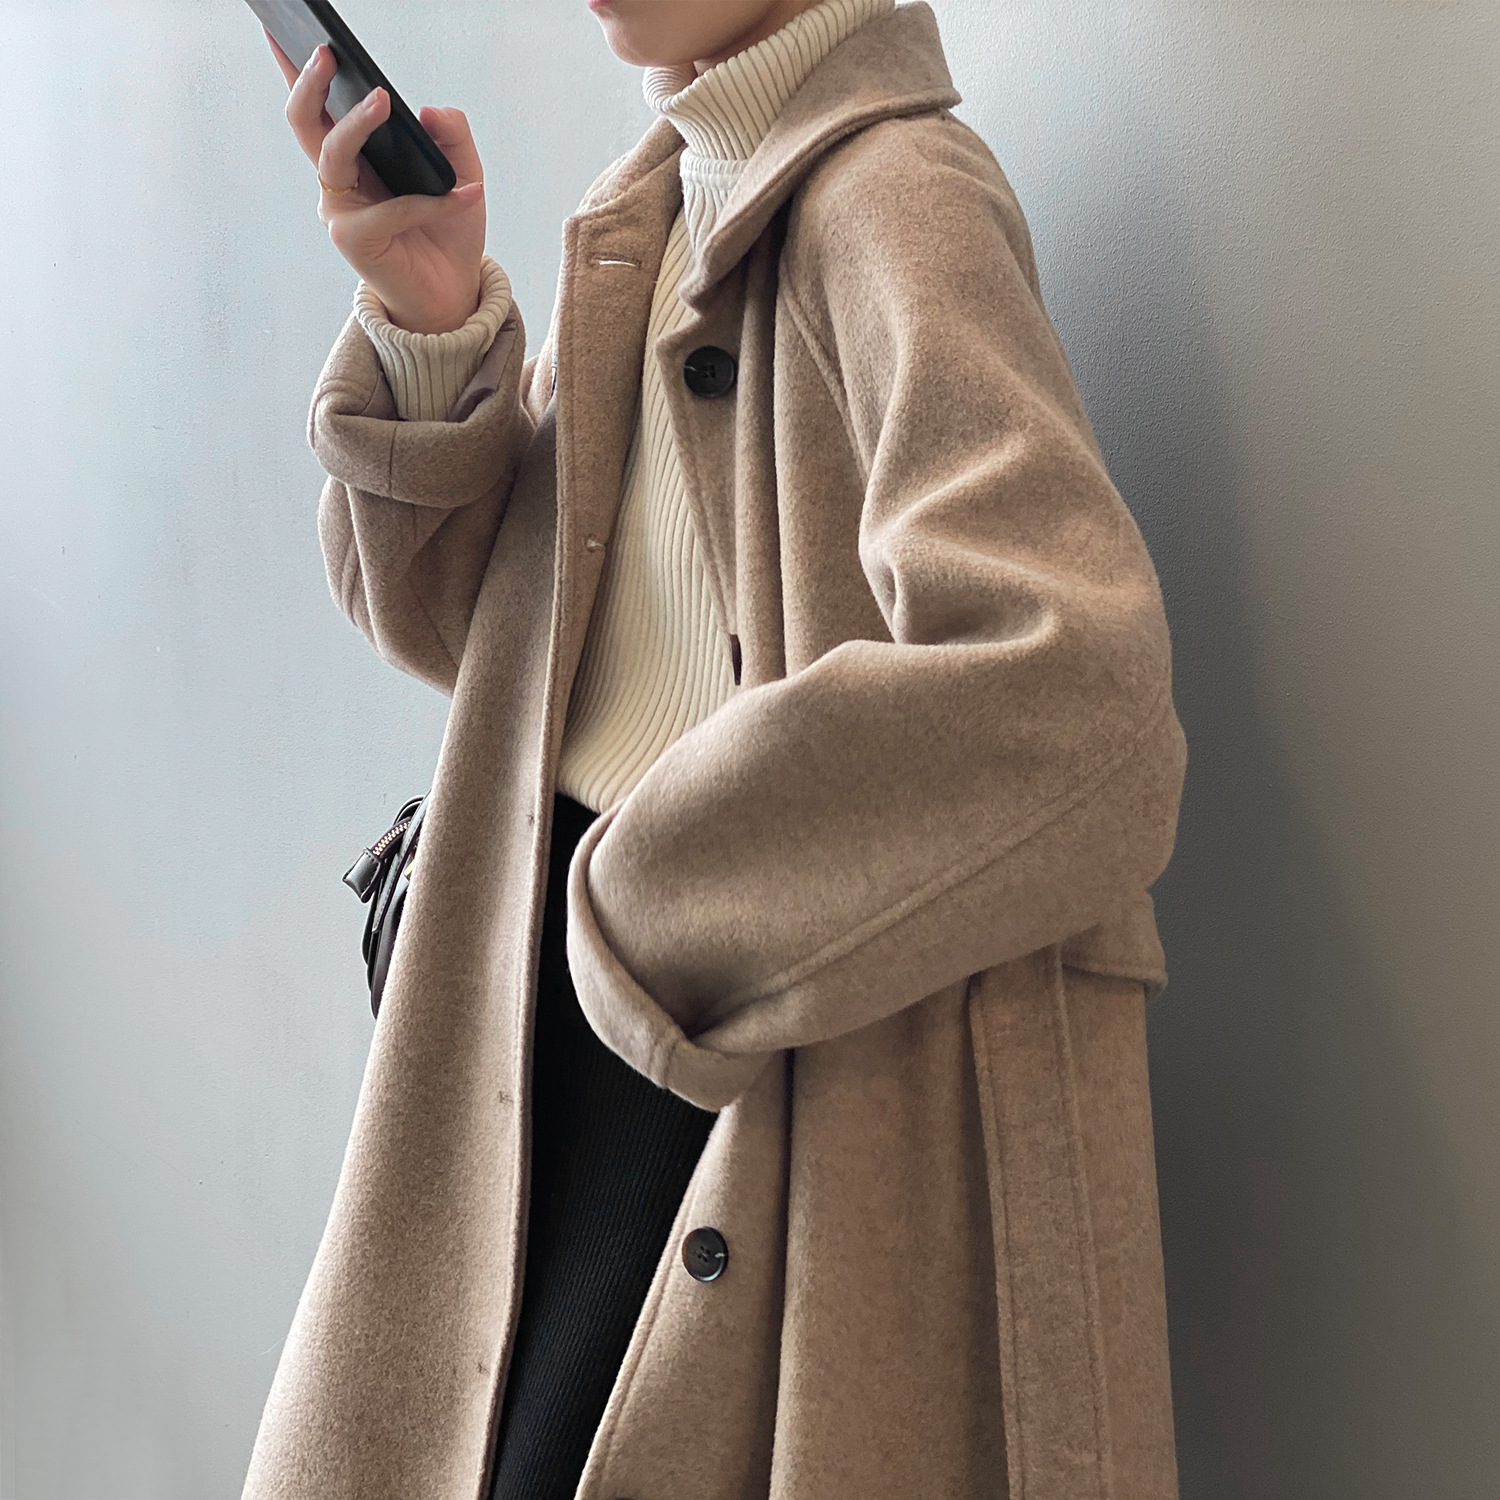 Women's Winter Long Wool Coat Outerwear 2020 Ladies Trench Korean Cashmere Female Loose Warm Clothes Windbreaker Jackets